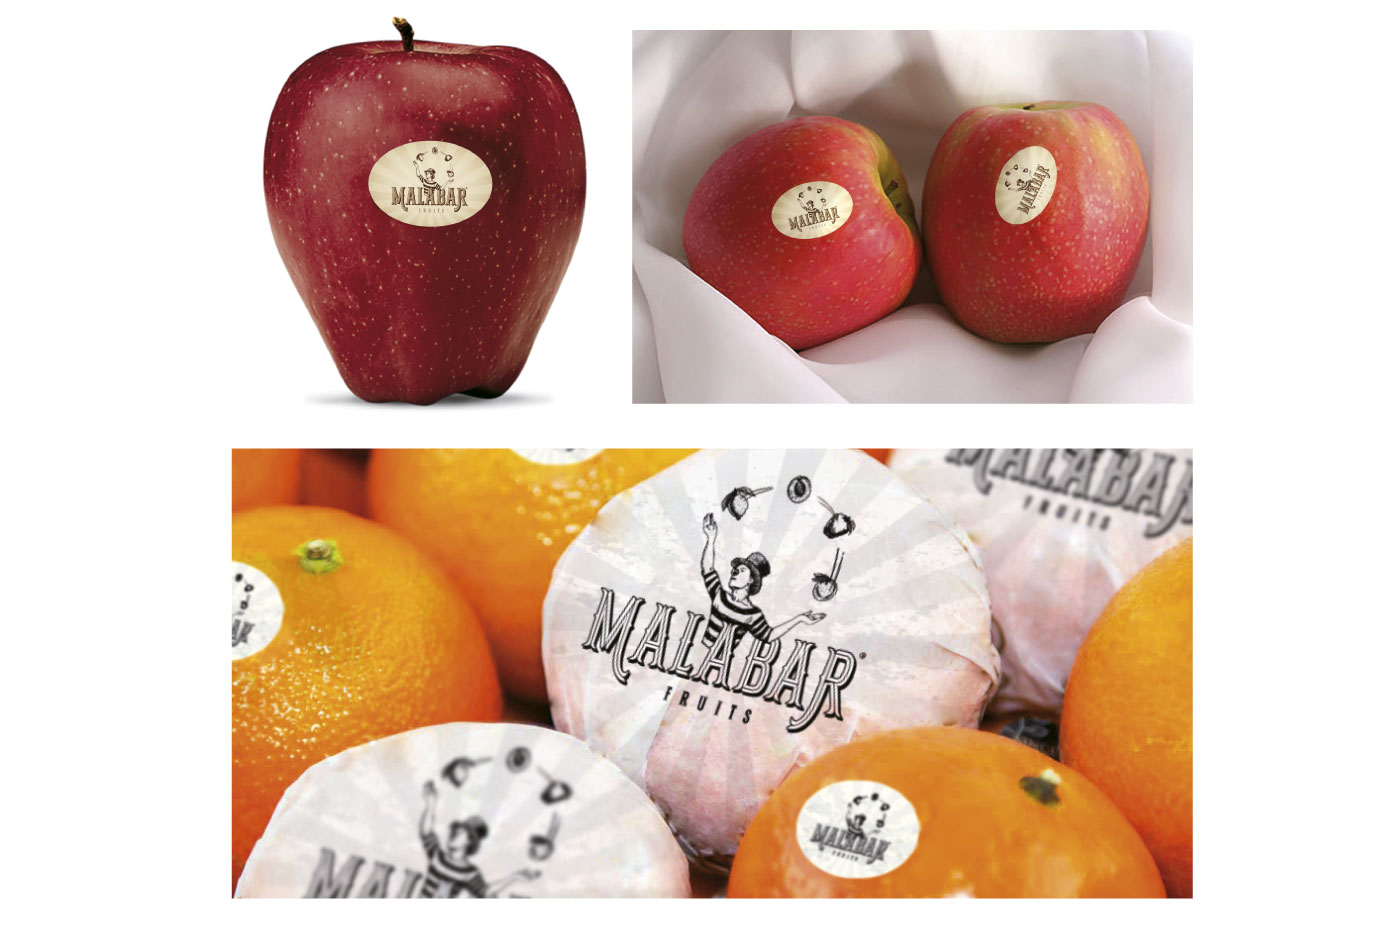 Malabar fruits design packaging original